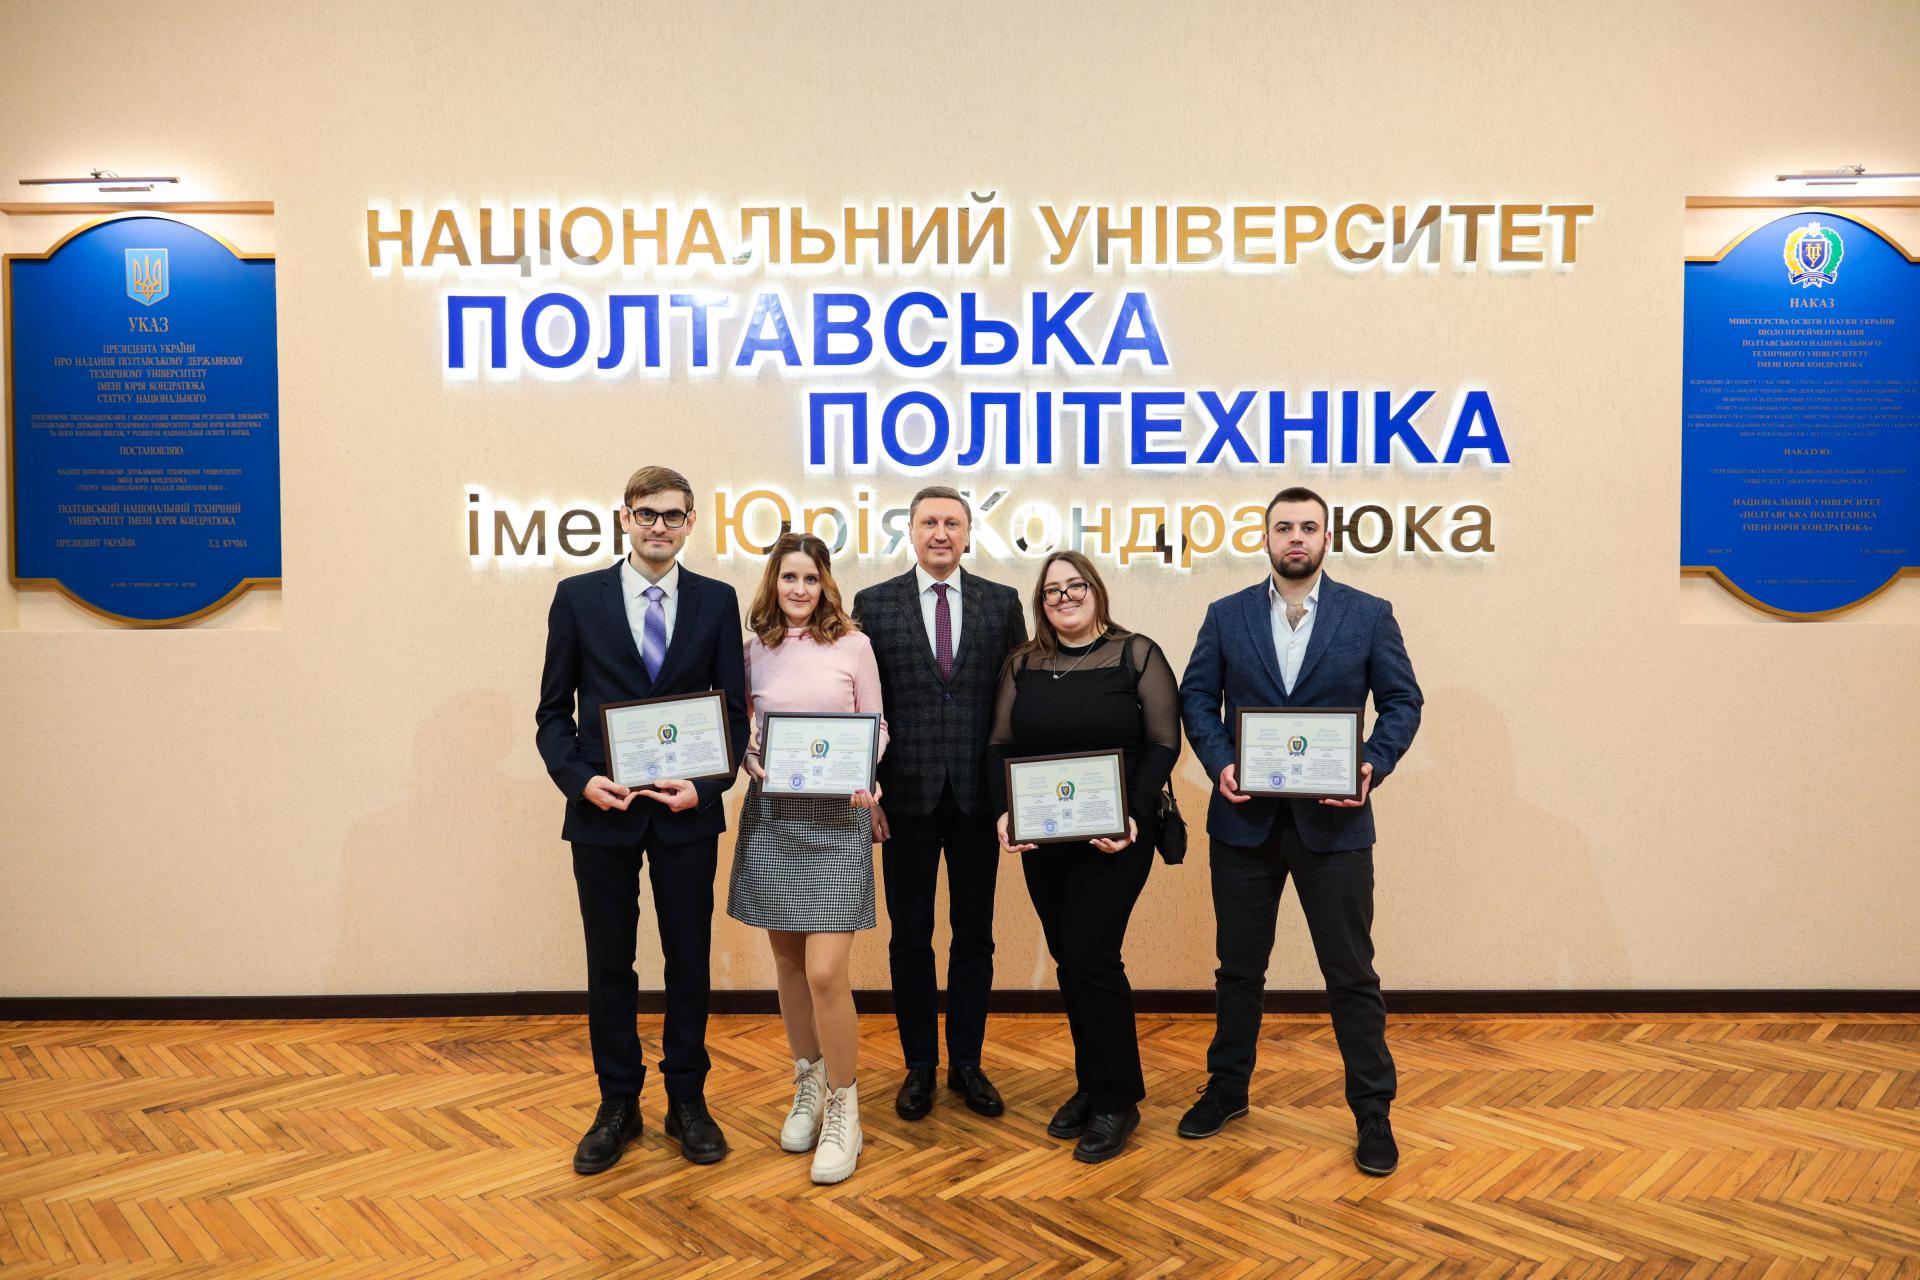 Four graduates of the Polytechnic's postgraduate program receive Doctor of Philosophy degrees